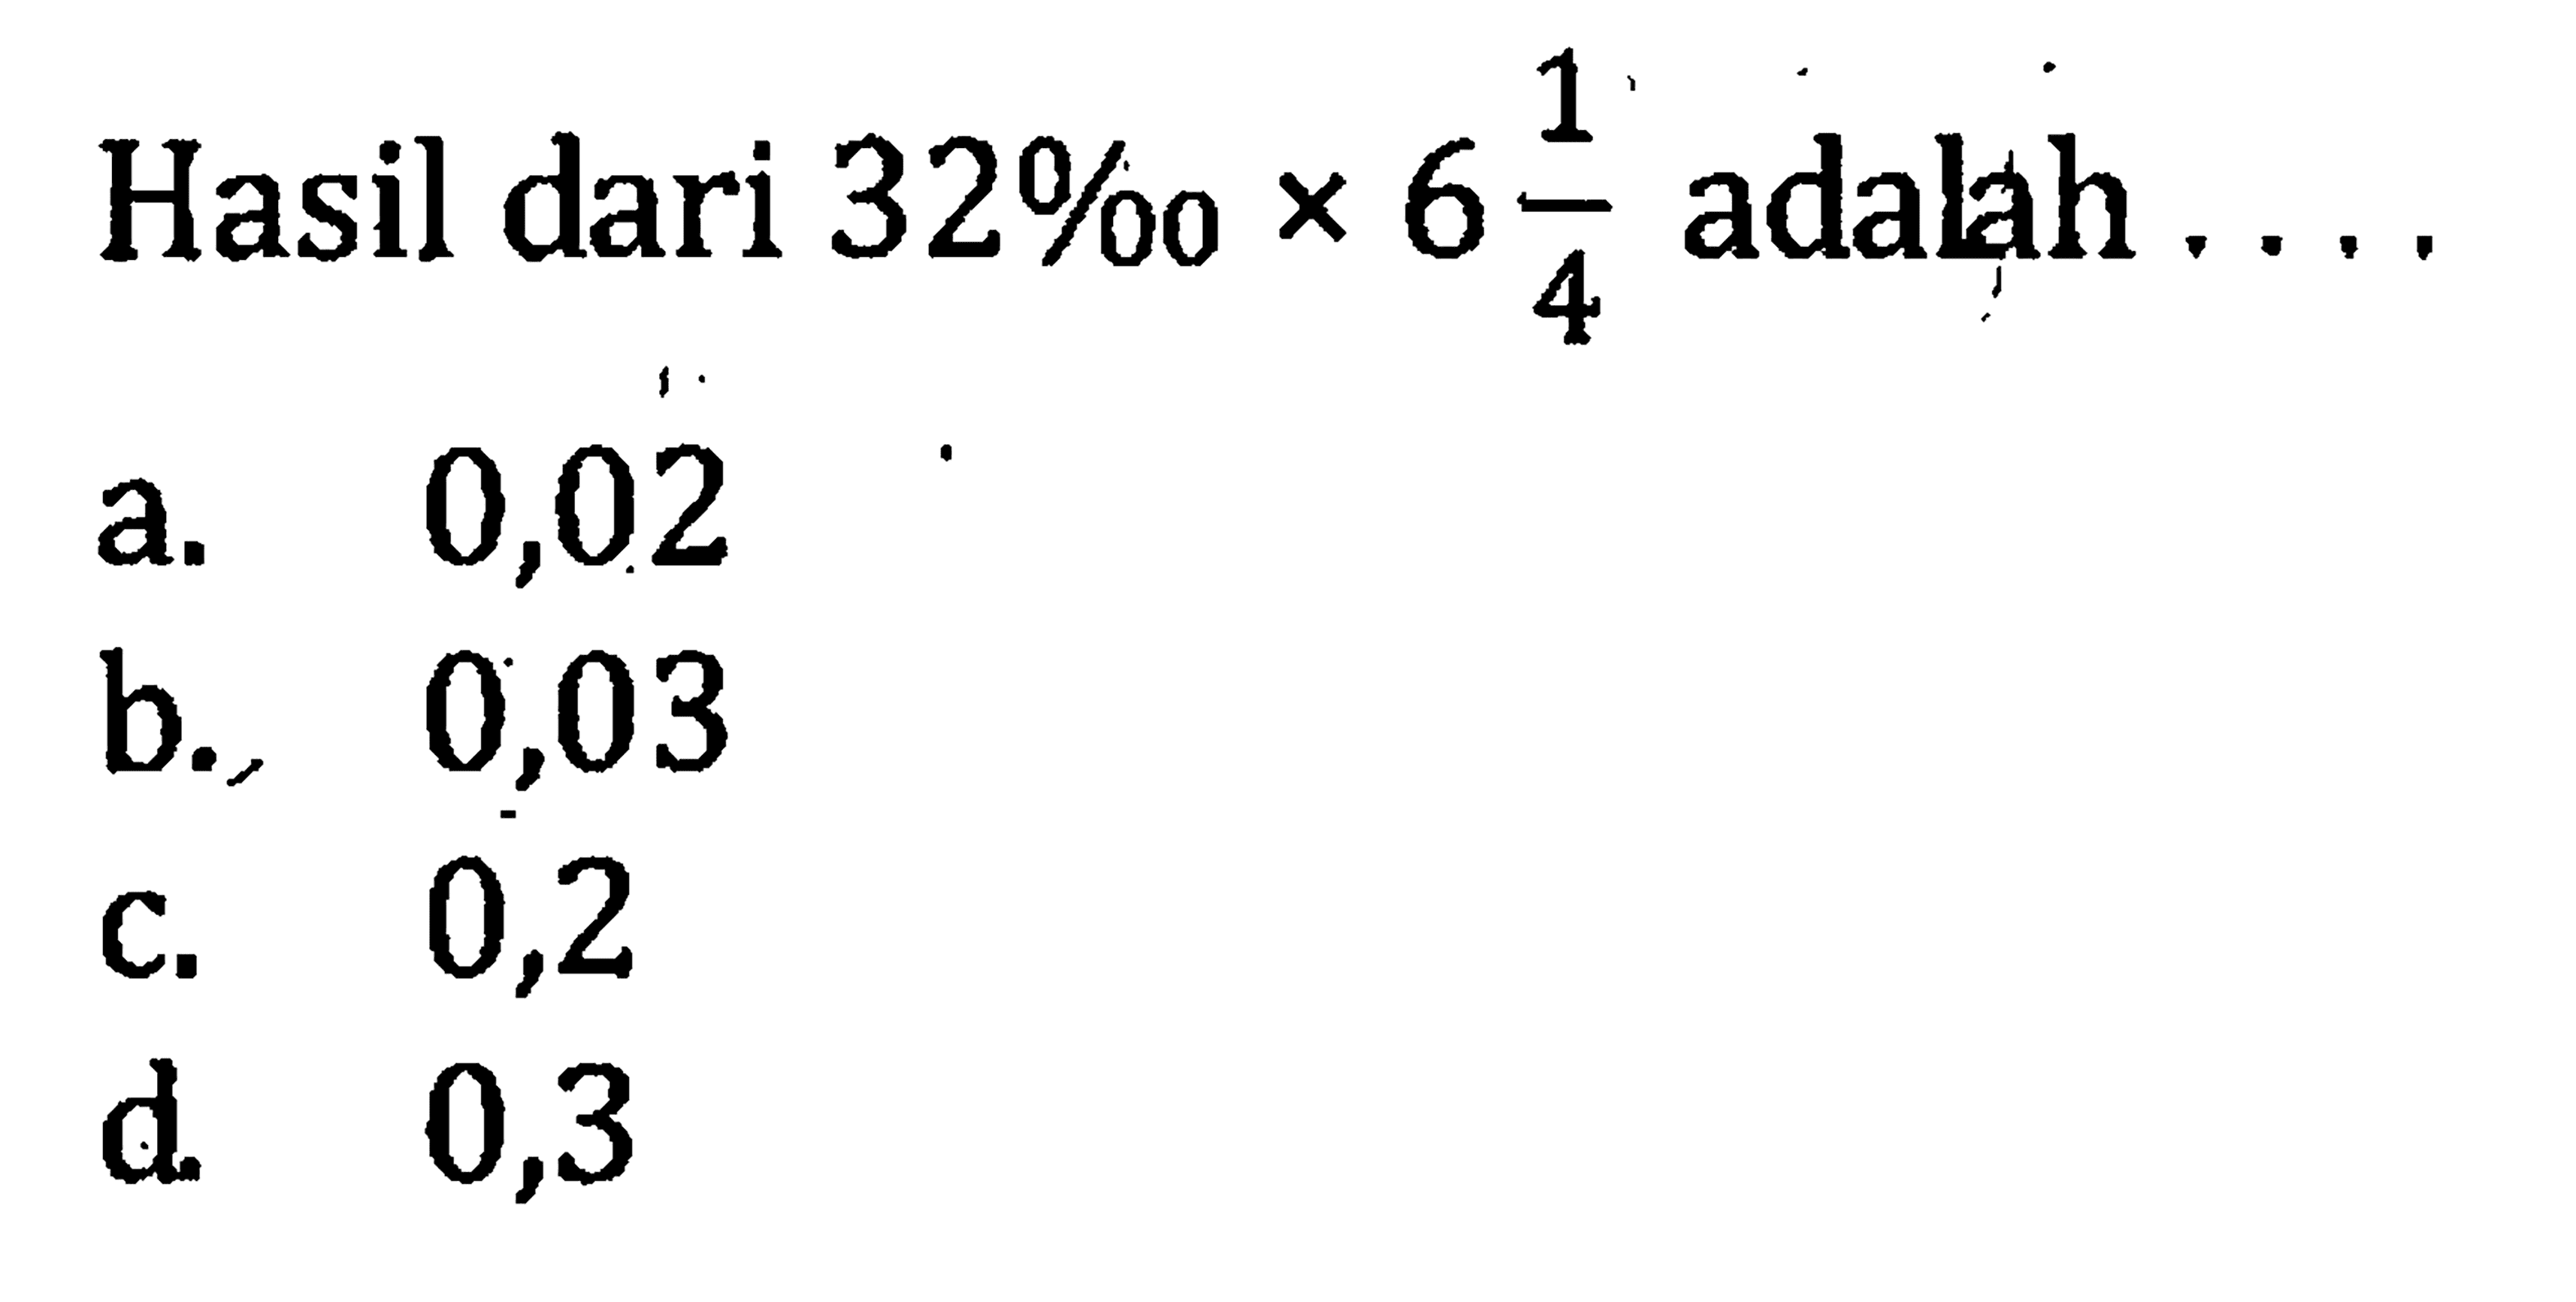 Hasil dari 32 permil x 6 1/4 adalah.... a. 0,02 b. 0,03 c. 0,2 d. 0,3